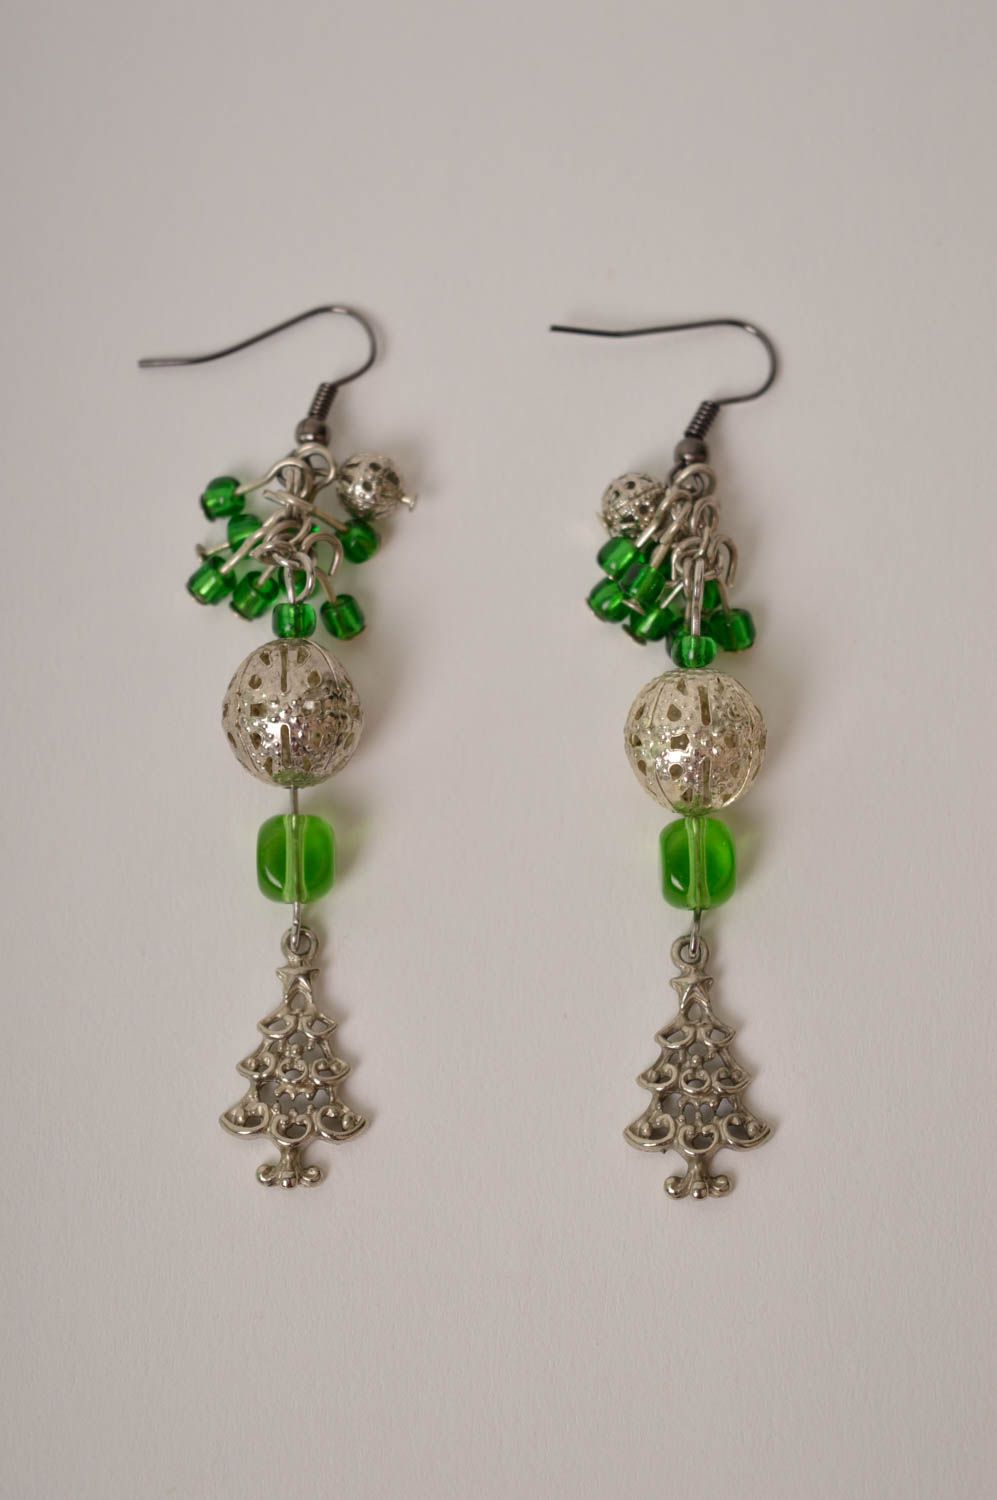 Handmade earrings with charms designer dangling earrings elegant accessory photo 2